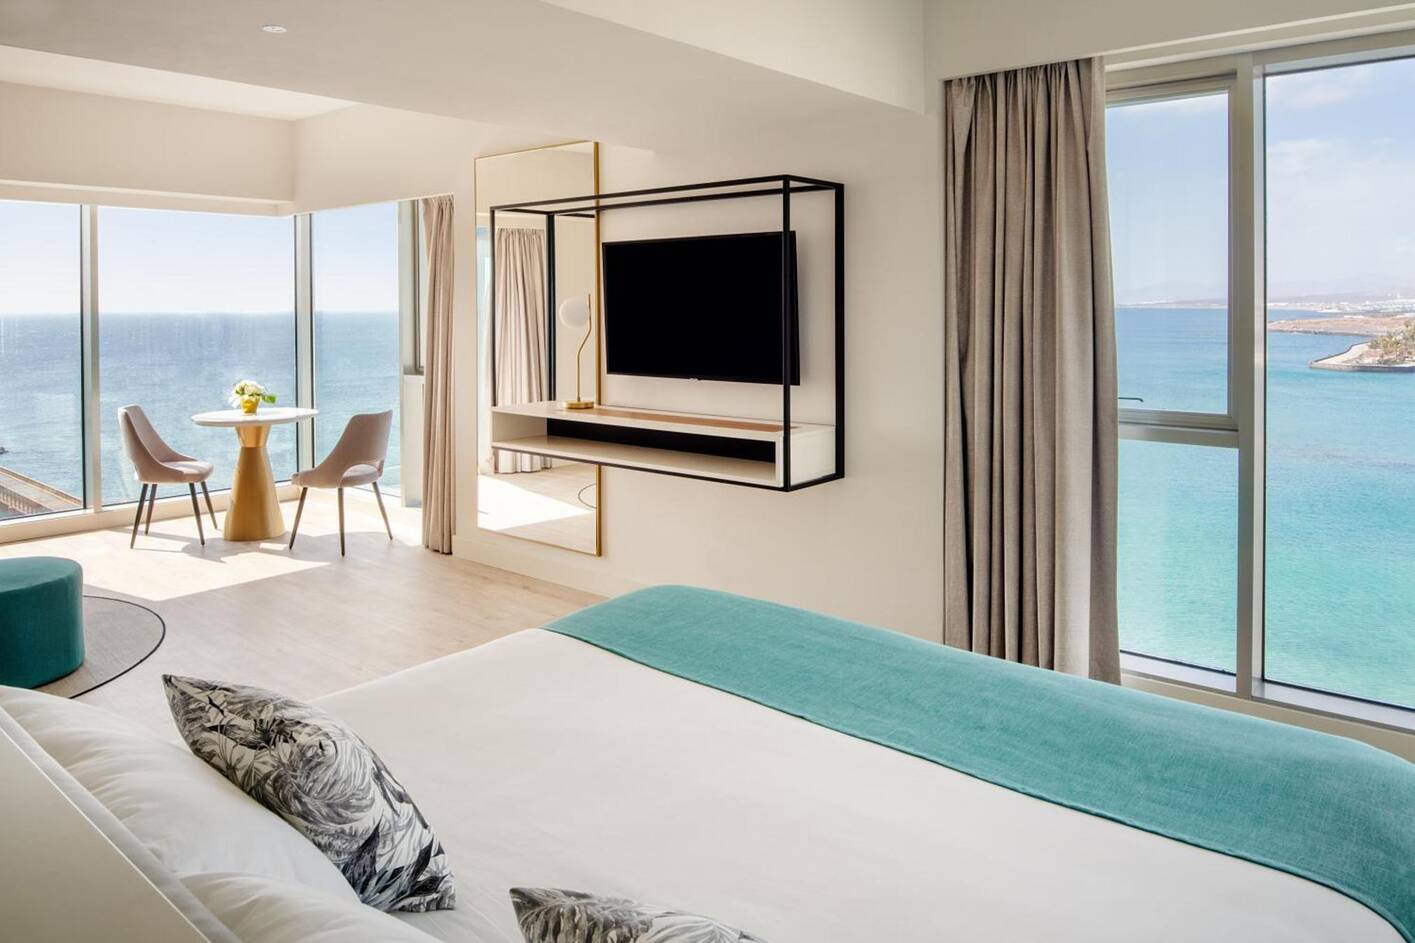 Arrecife Gran Hotel & Spa, best 5 star hotels in lanzarote